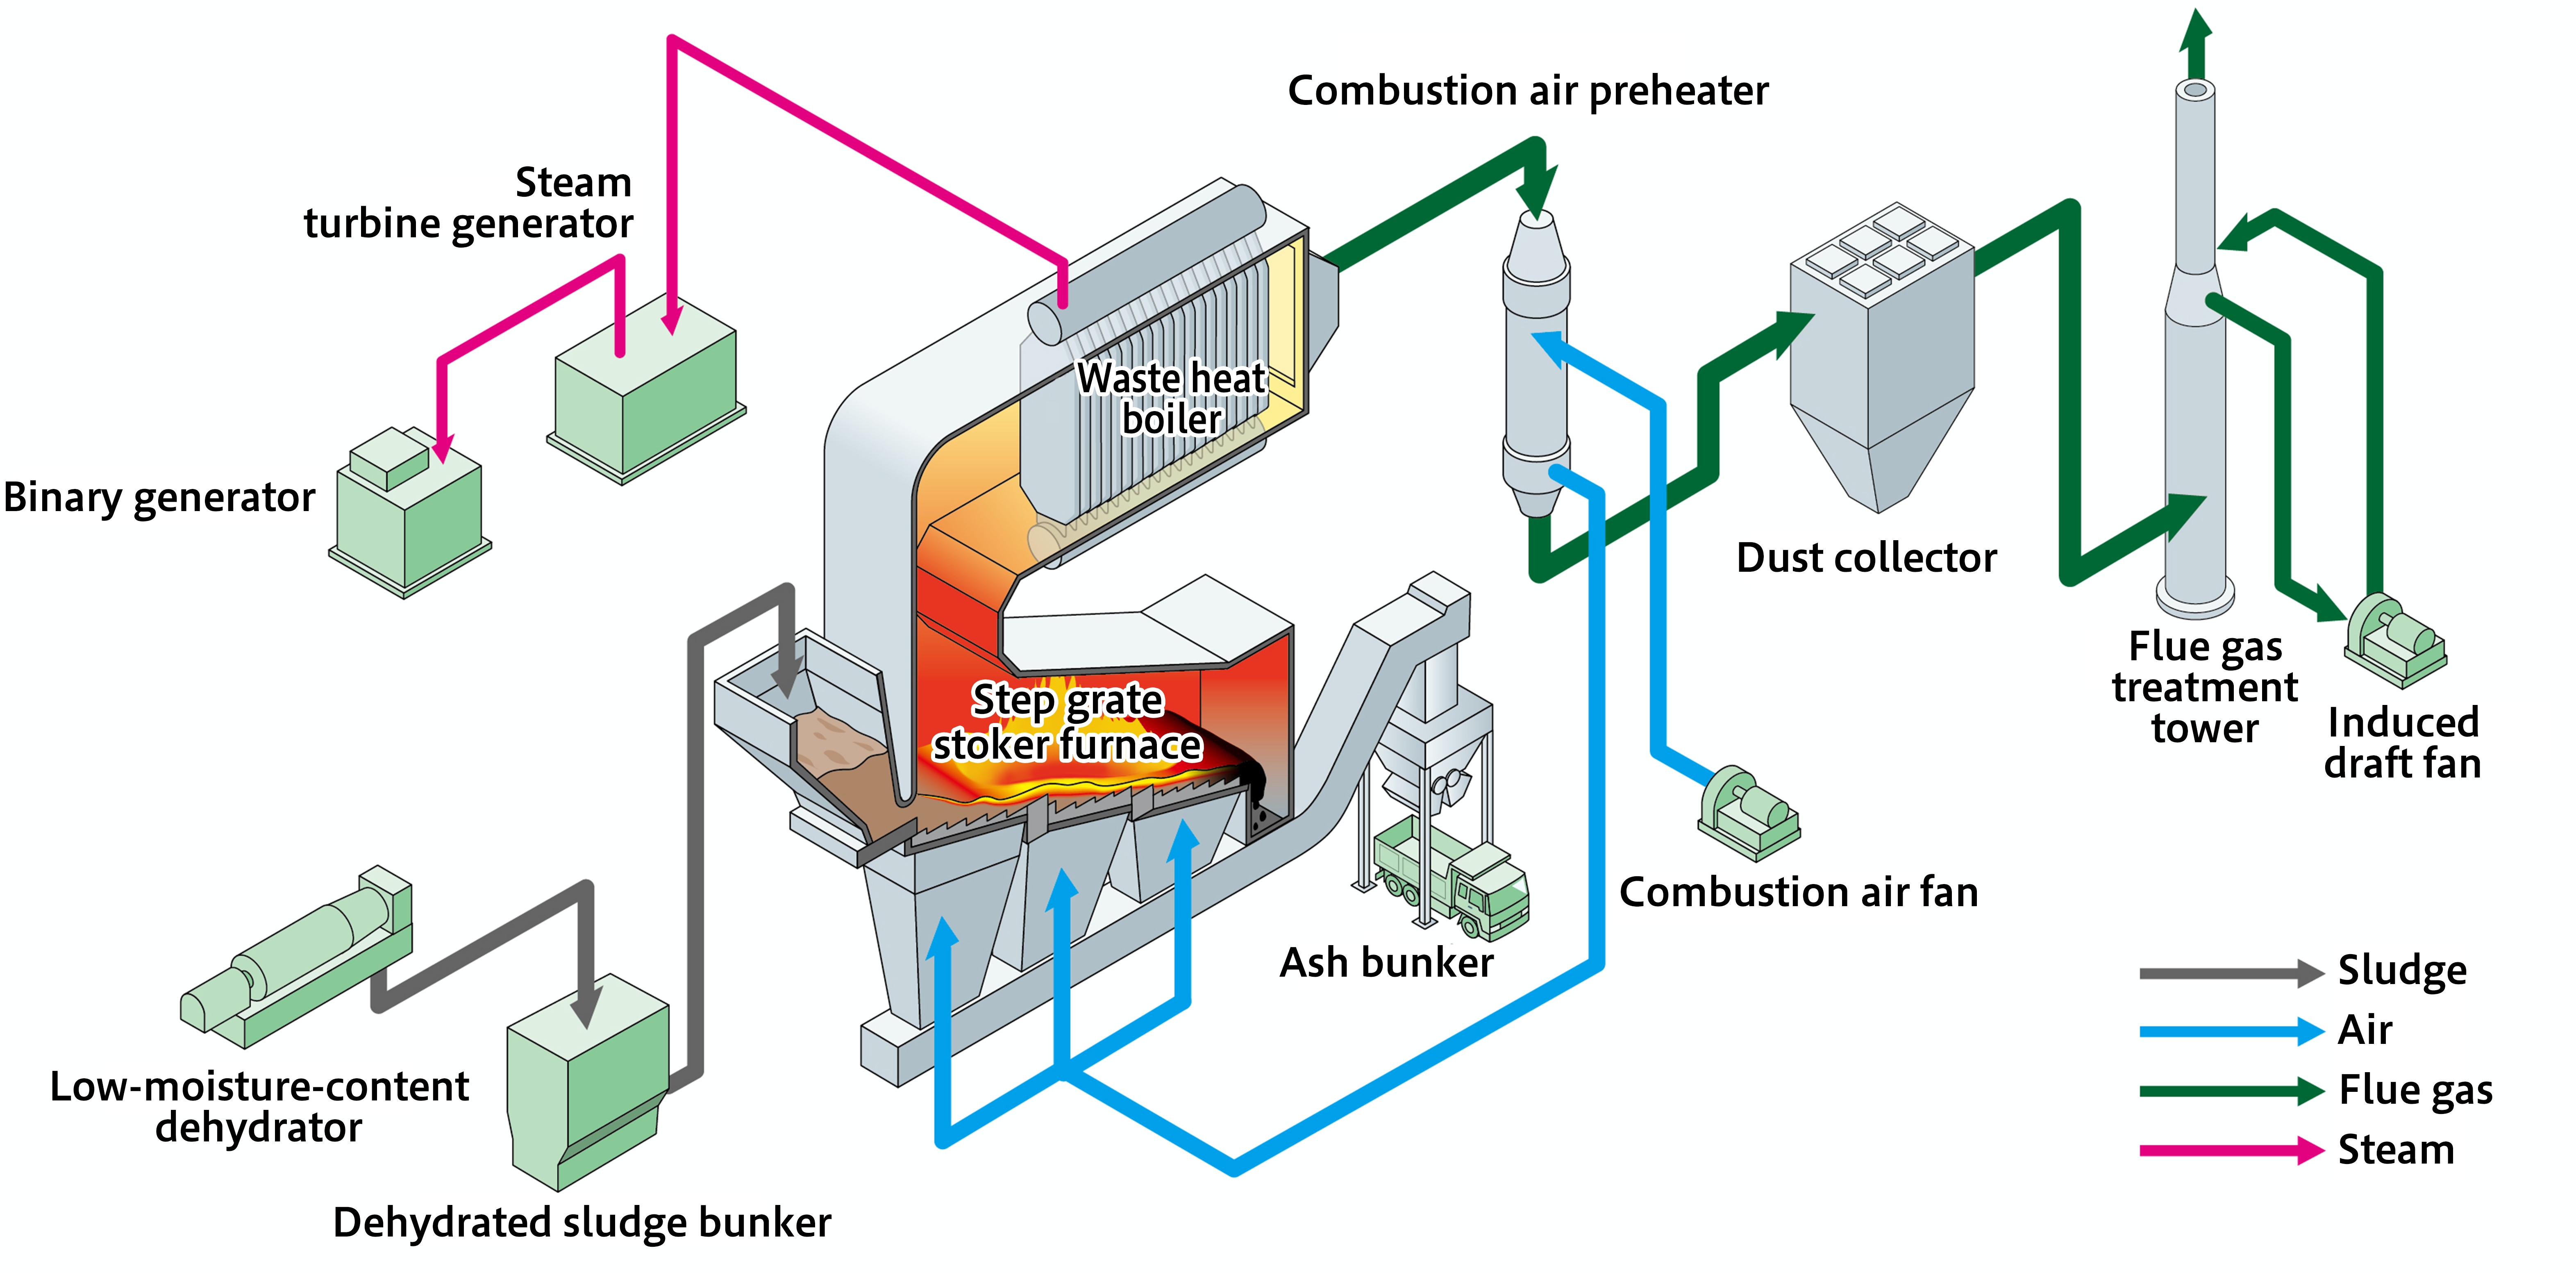 Type B: Low-moisture-content dehydrator (two-coagulant sludge conditioning) + next-generation step grate stoker furnace